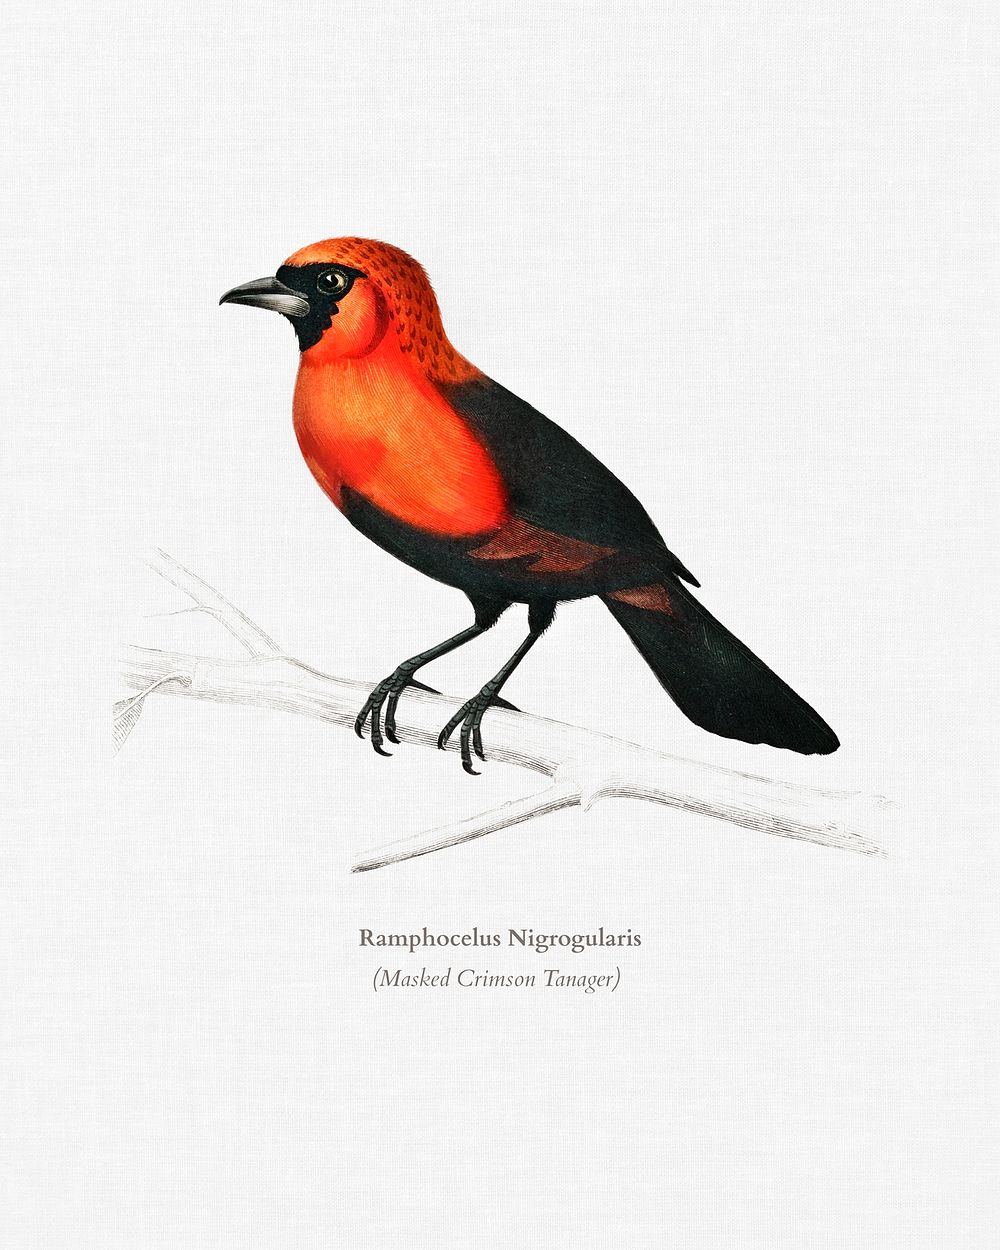 Masked crimson tanager (Ramphocelus Nigrogularis) illustrated by Charles Dessalines D' Orbigny (1806-1876). Digitally…